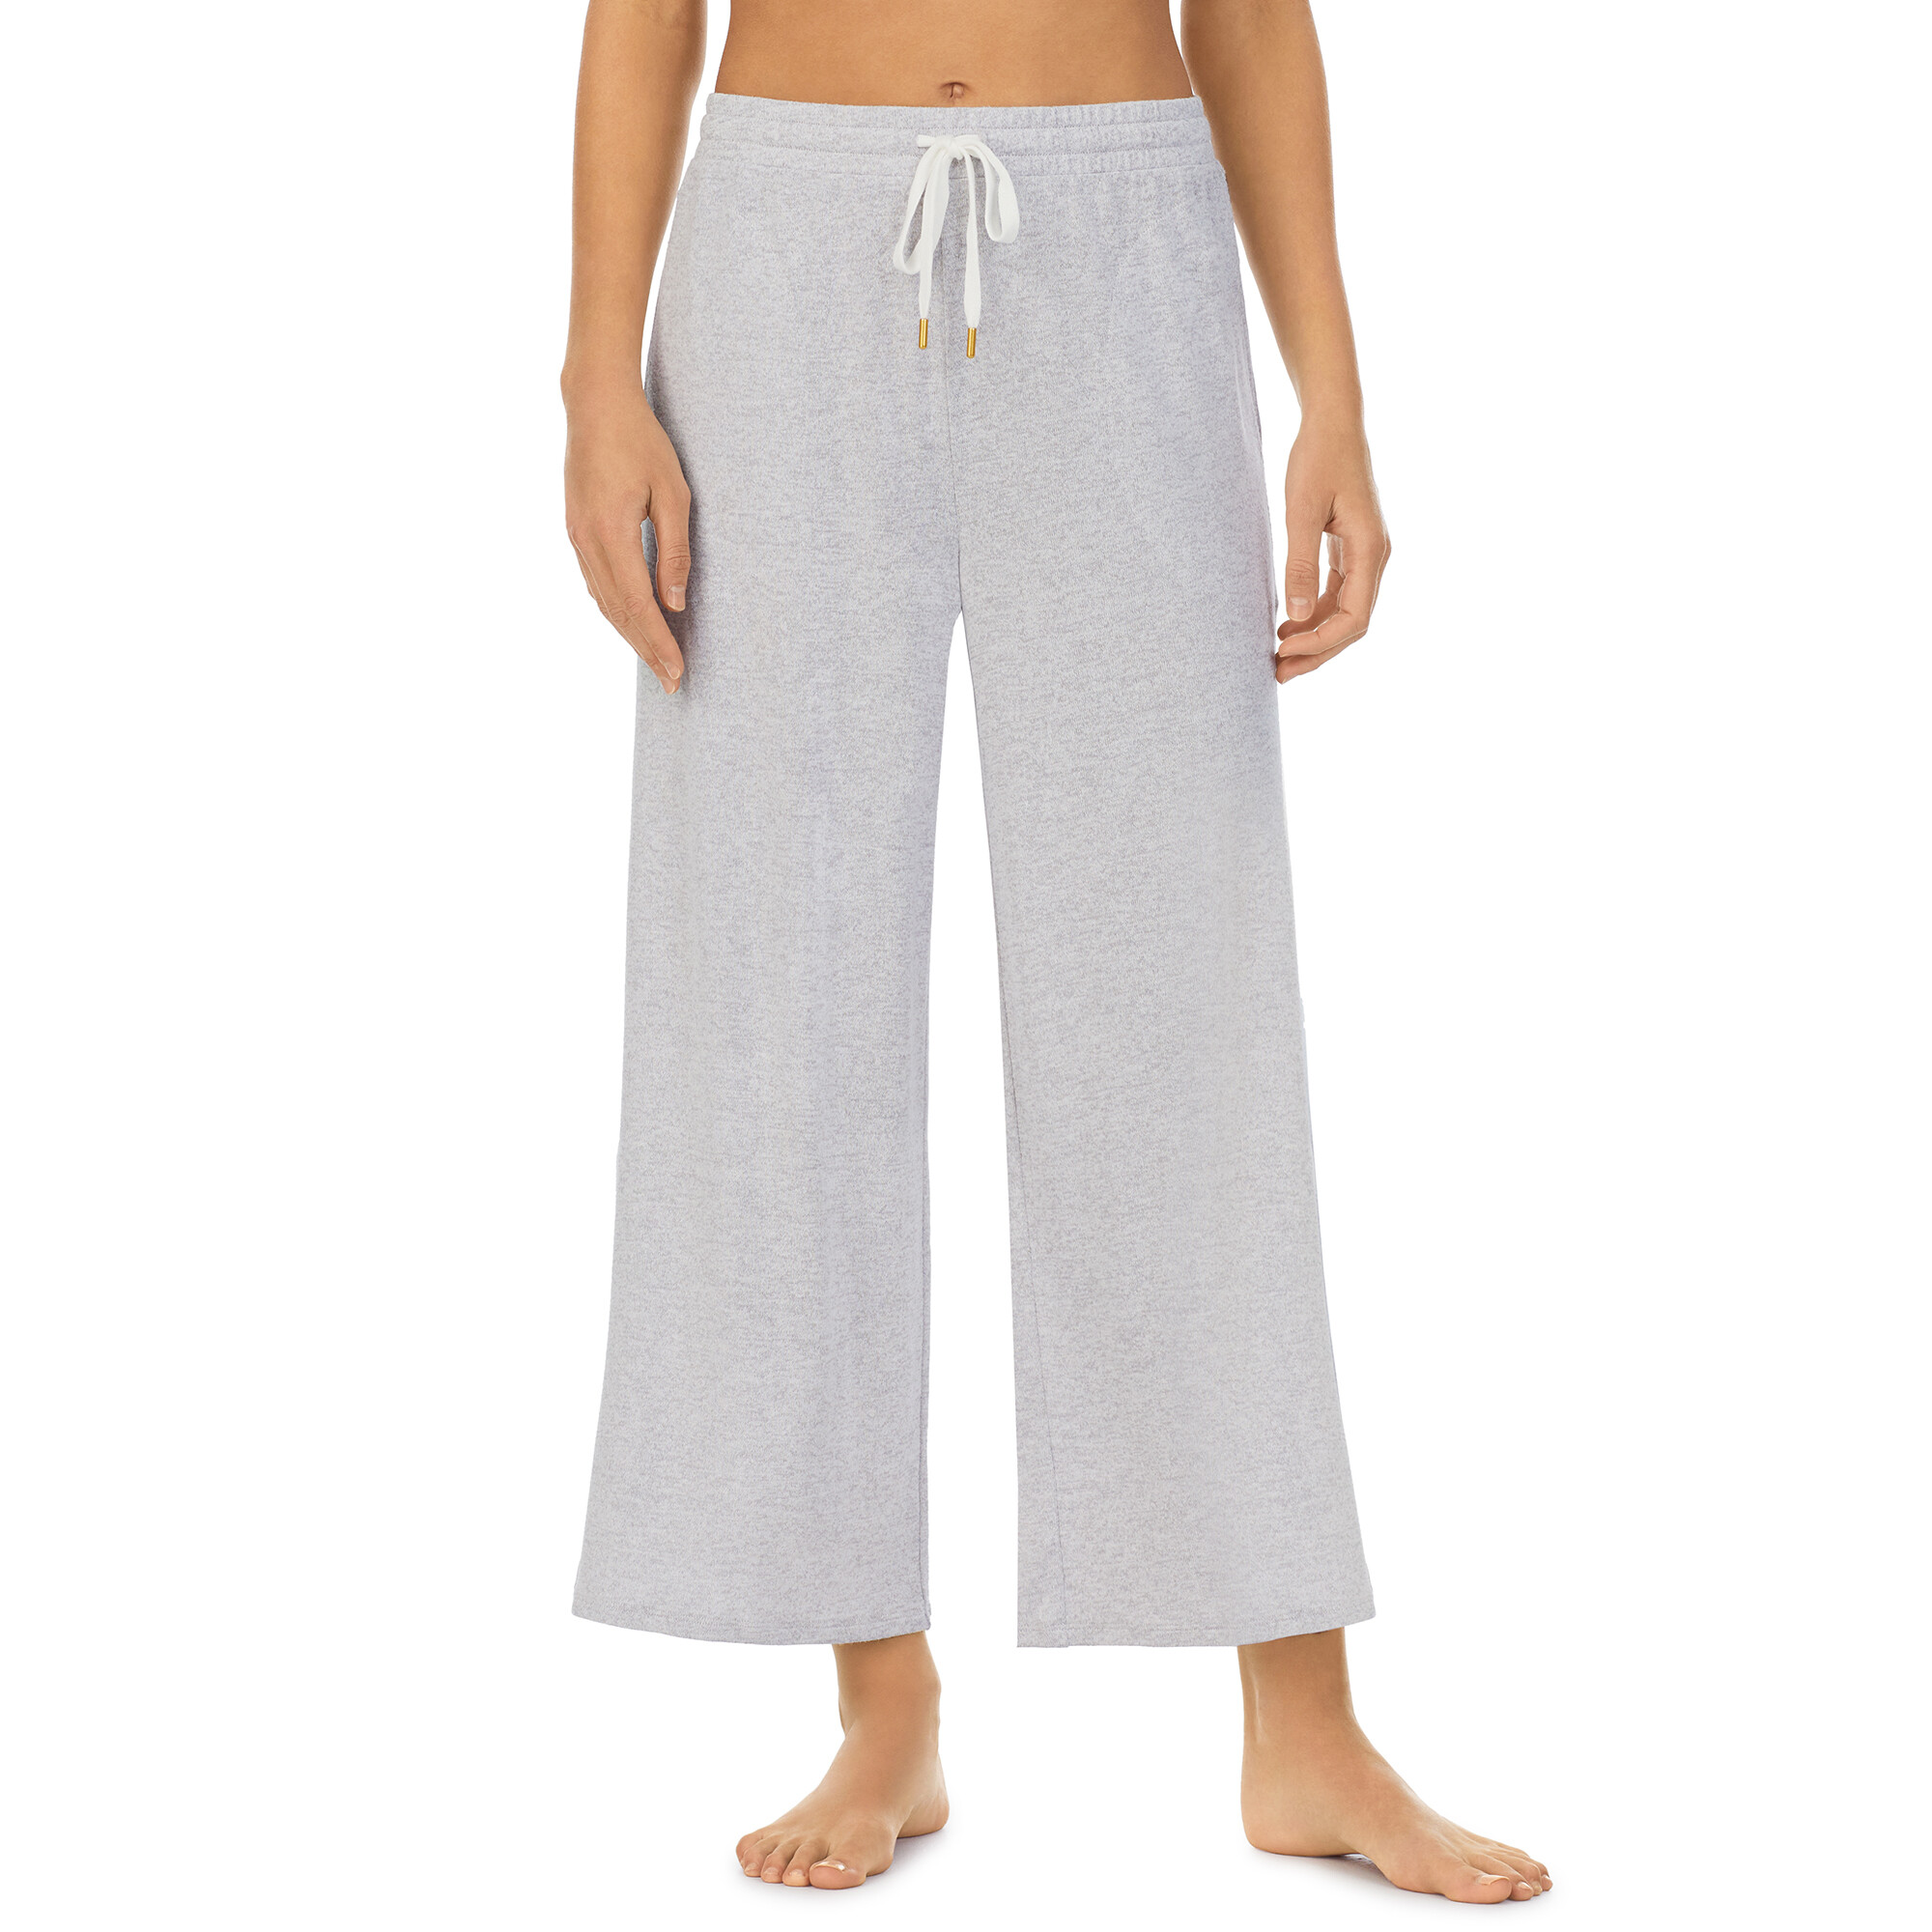 Imbracaminte Femei Donna Karan Crop Sleep Pants Grey Mist Marl